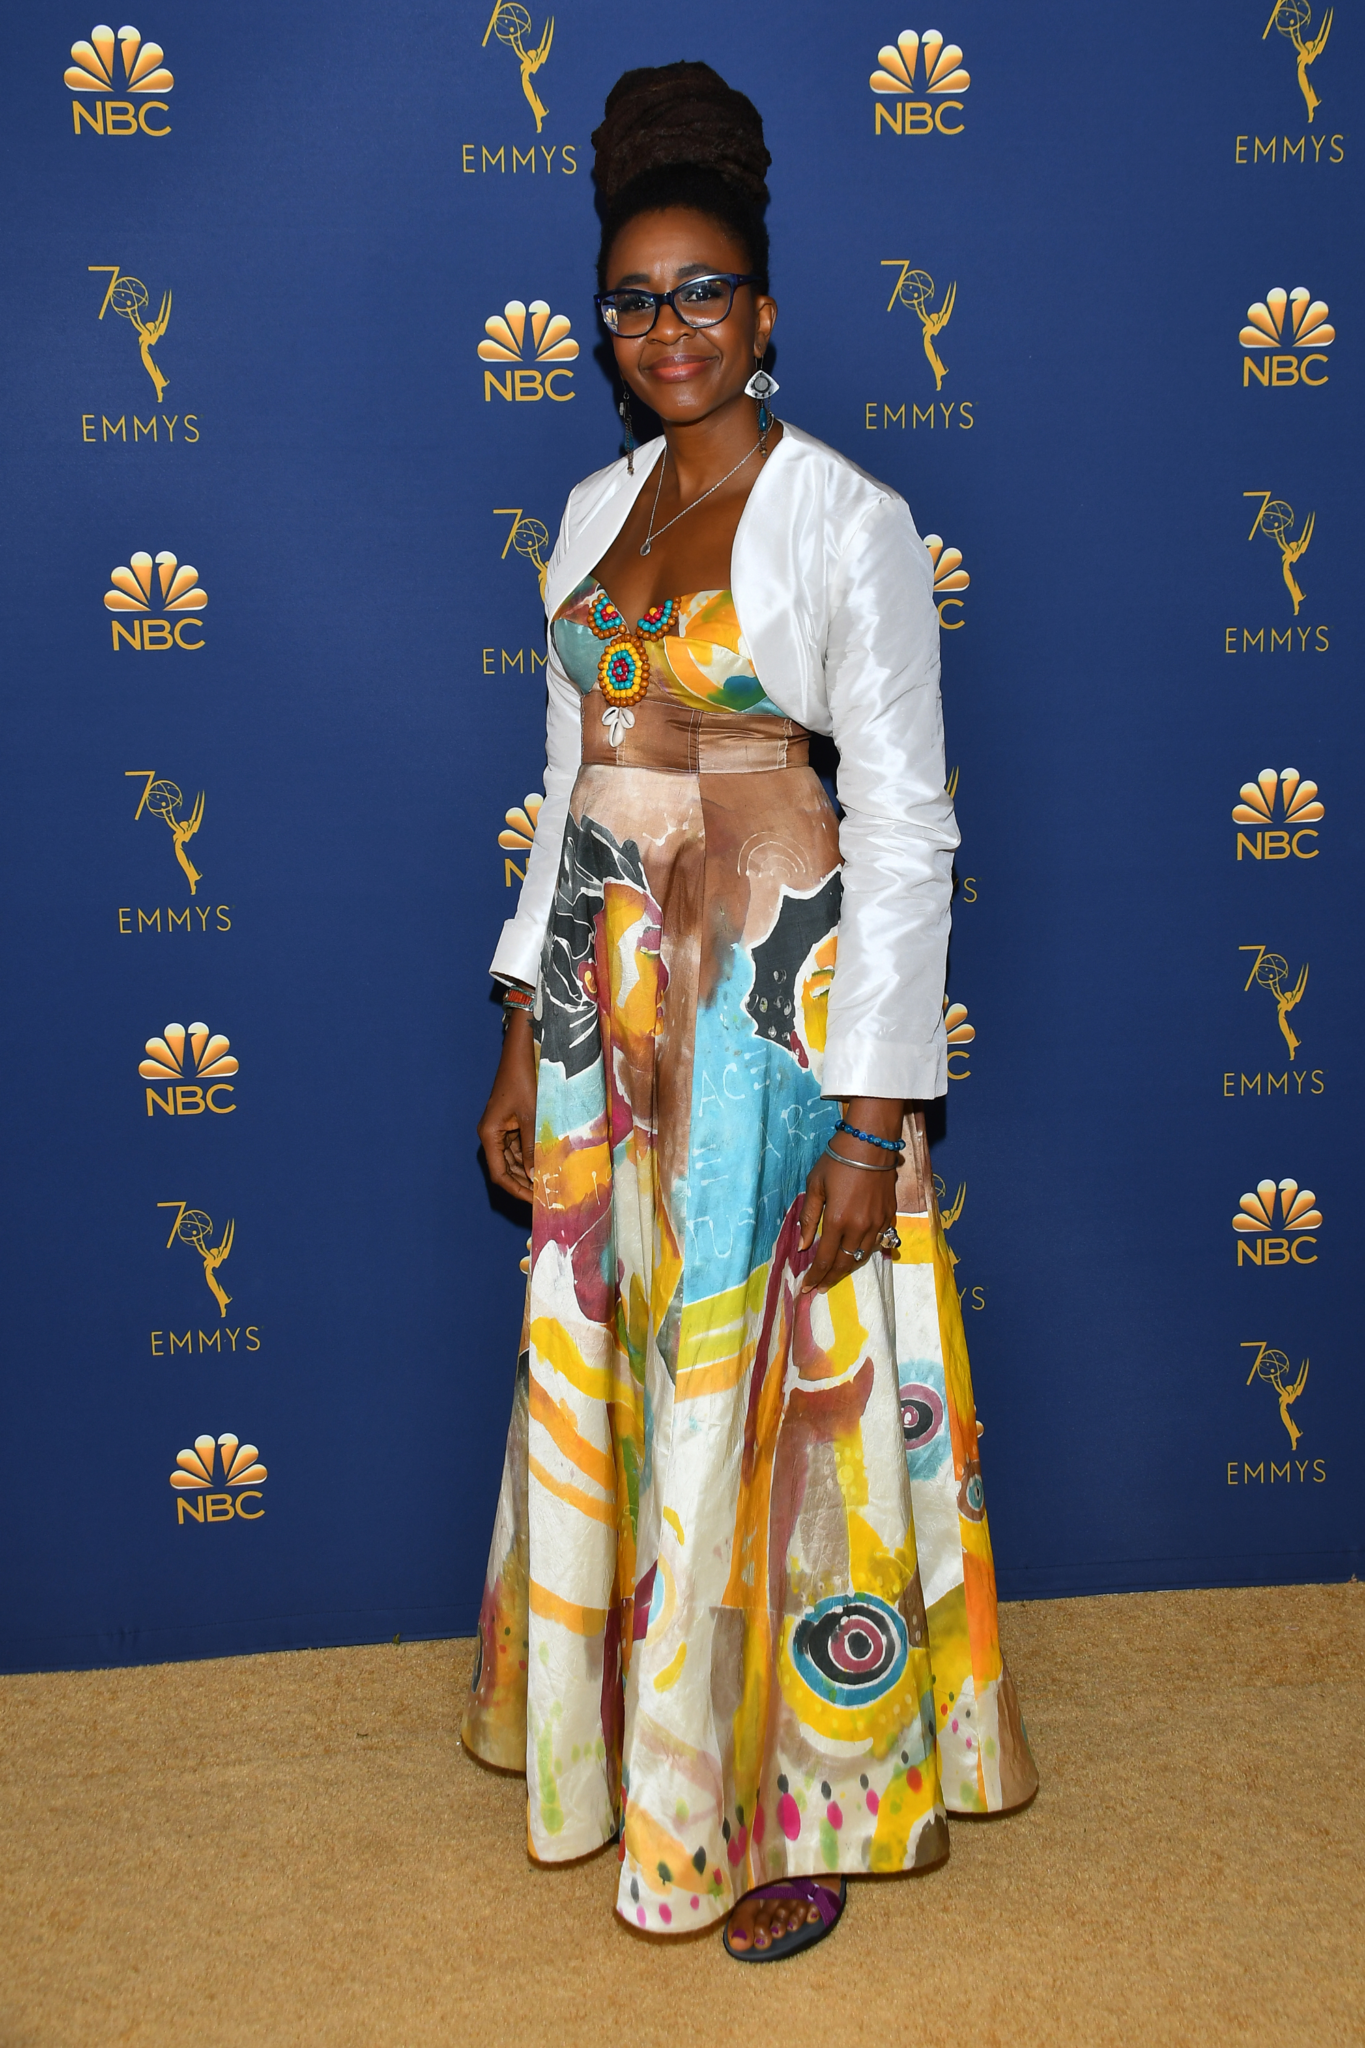 Nnedi Okorafor Emmys Primetime Red Carpet 4Chion Lifestyle 3_7631